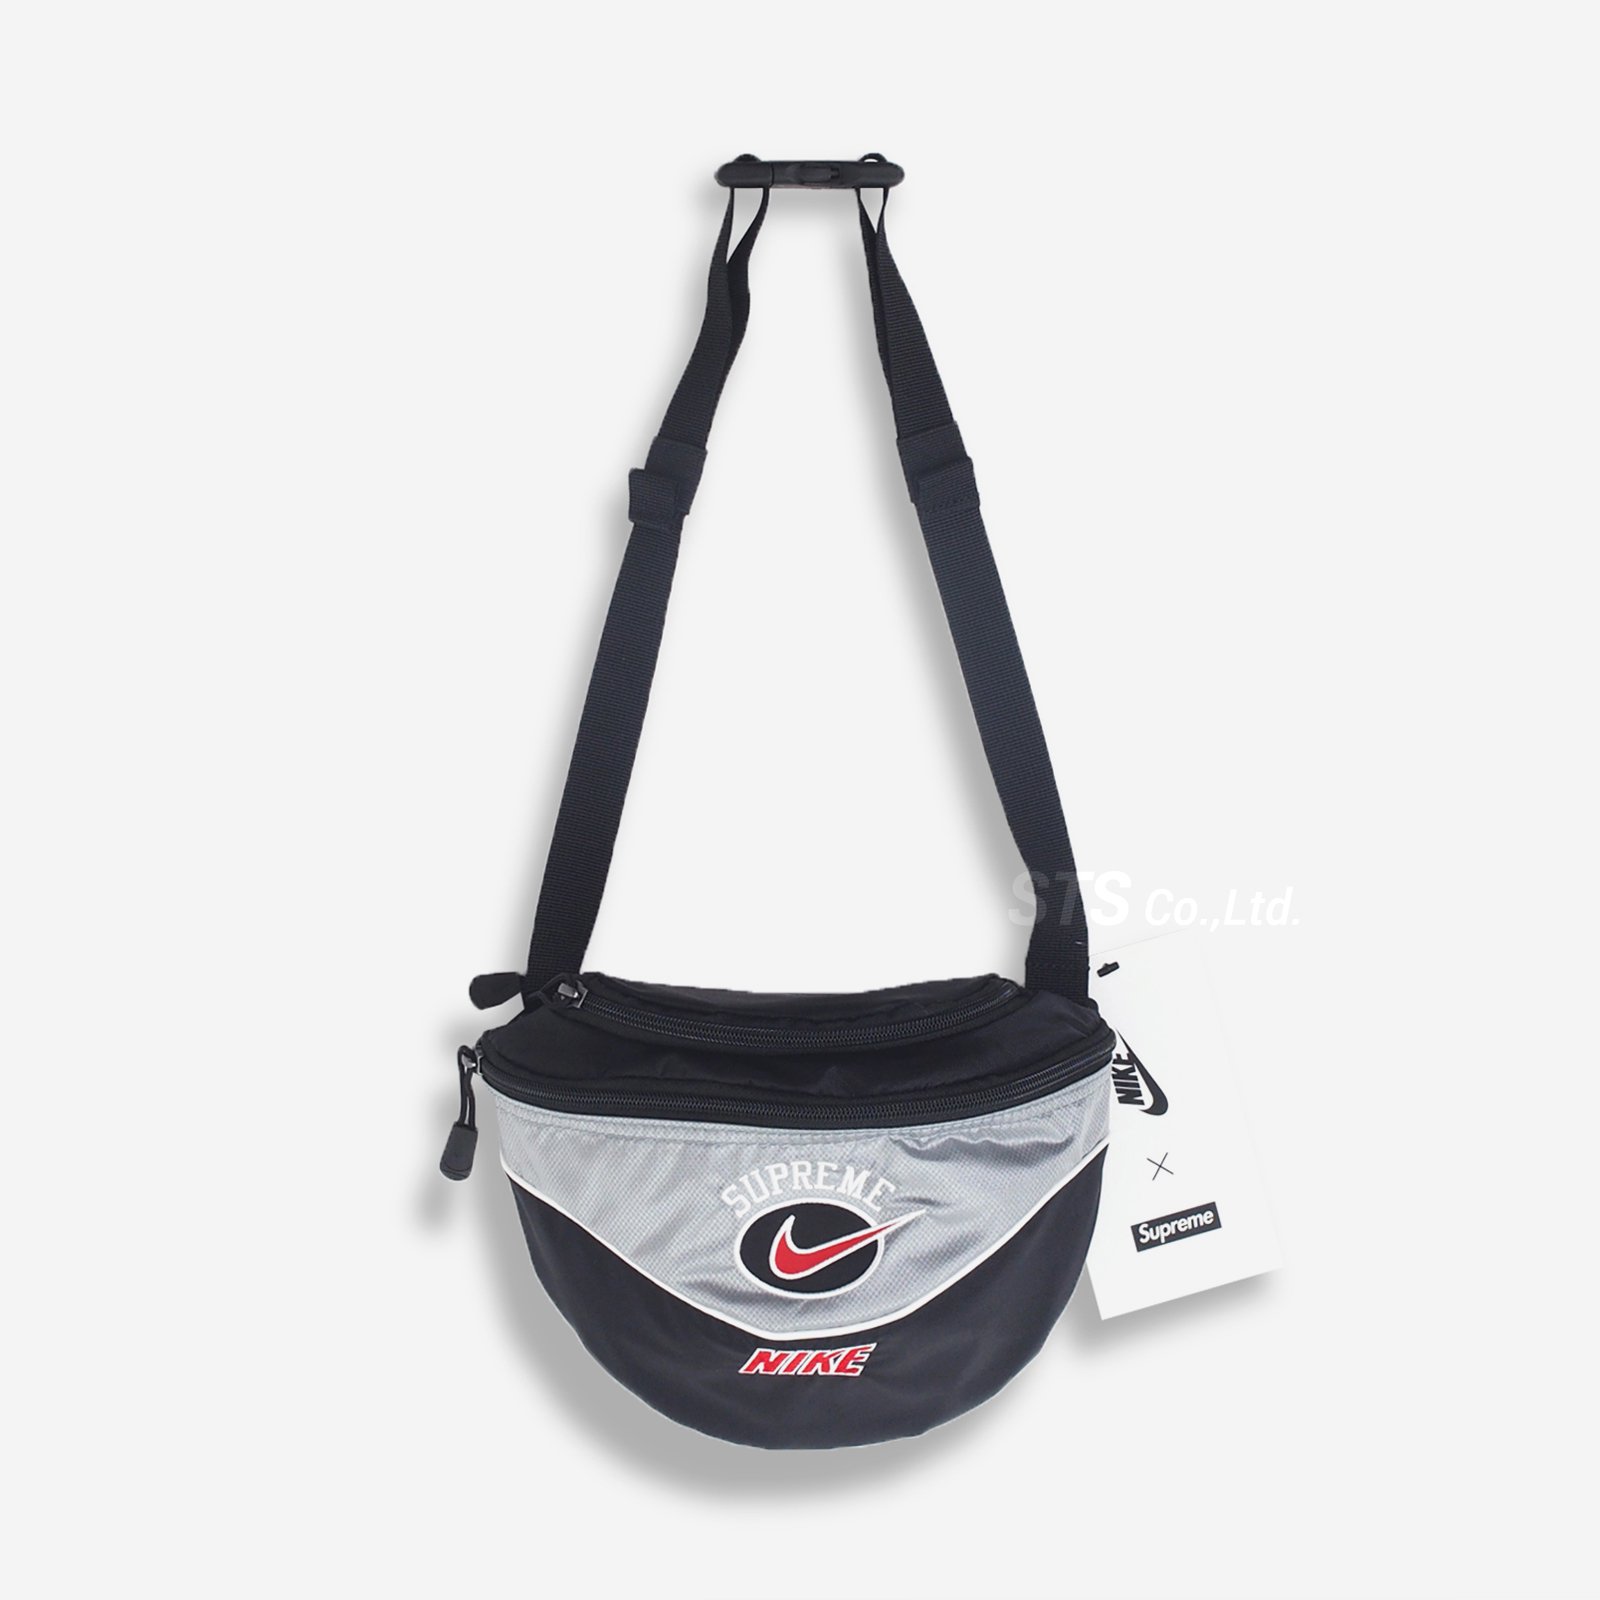 Supreme/Nike Shoulder Bag - UG.SHAFT